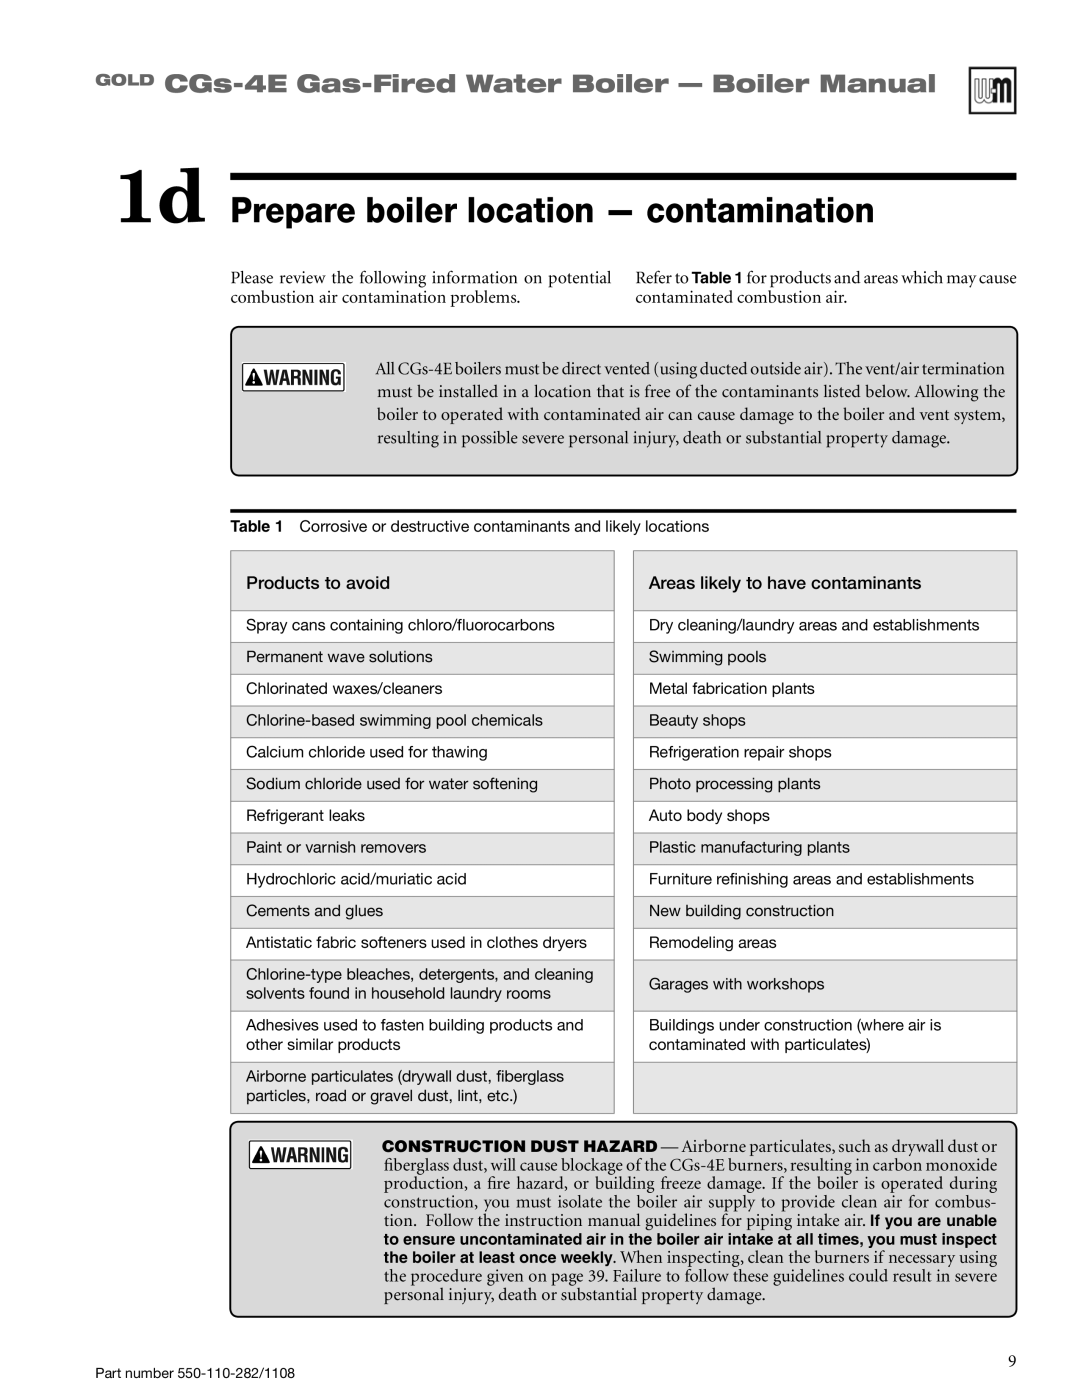 Weil-McLain CGS-4E manual 1d Prepare boiler location - contamination, GOLD CGs-4E Gas-FiredWater Boiler - Boiler Manual 